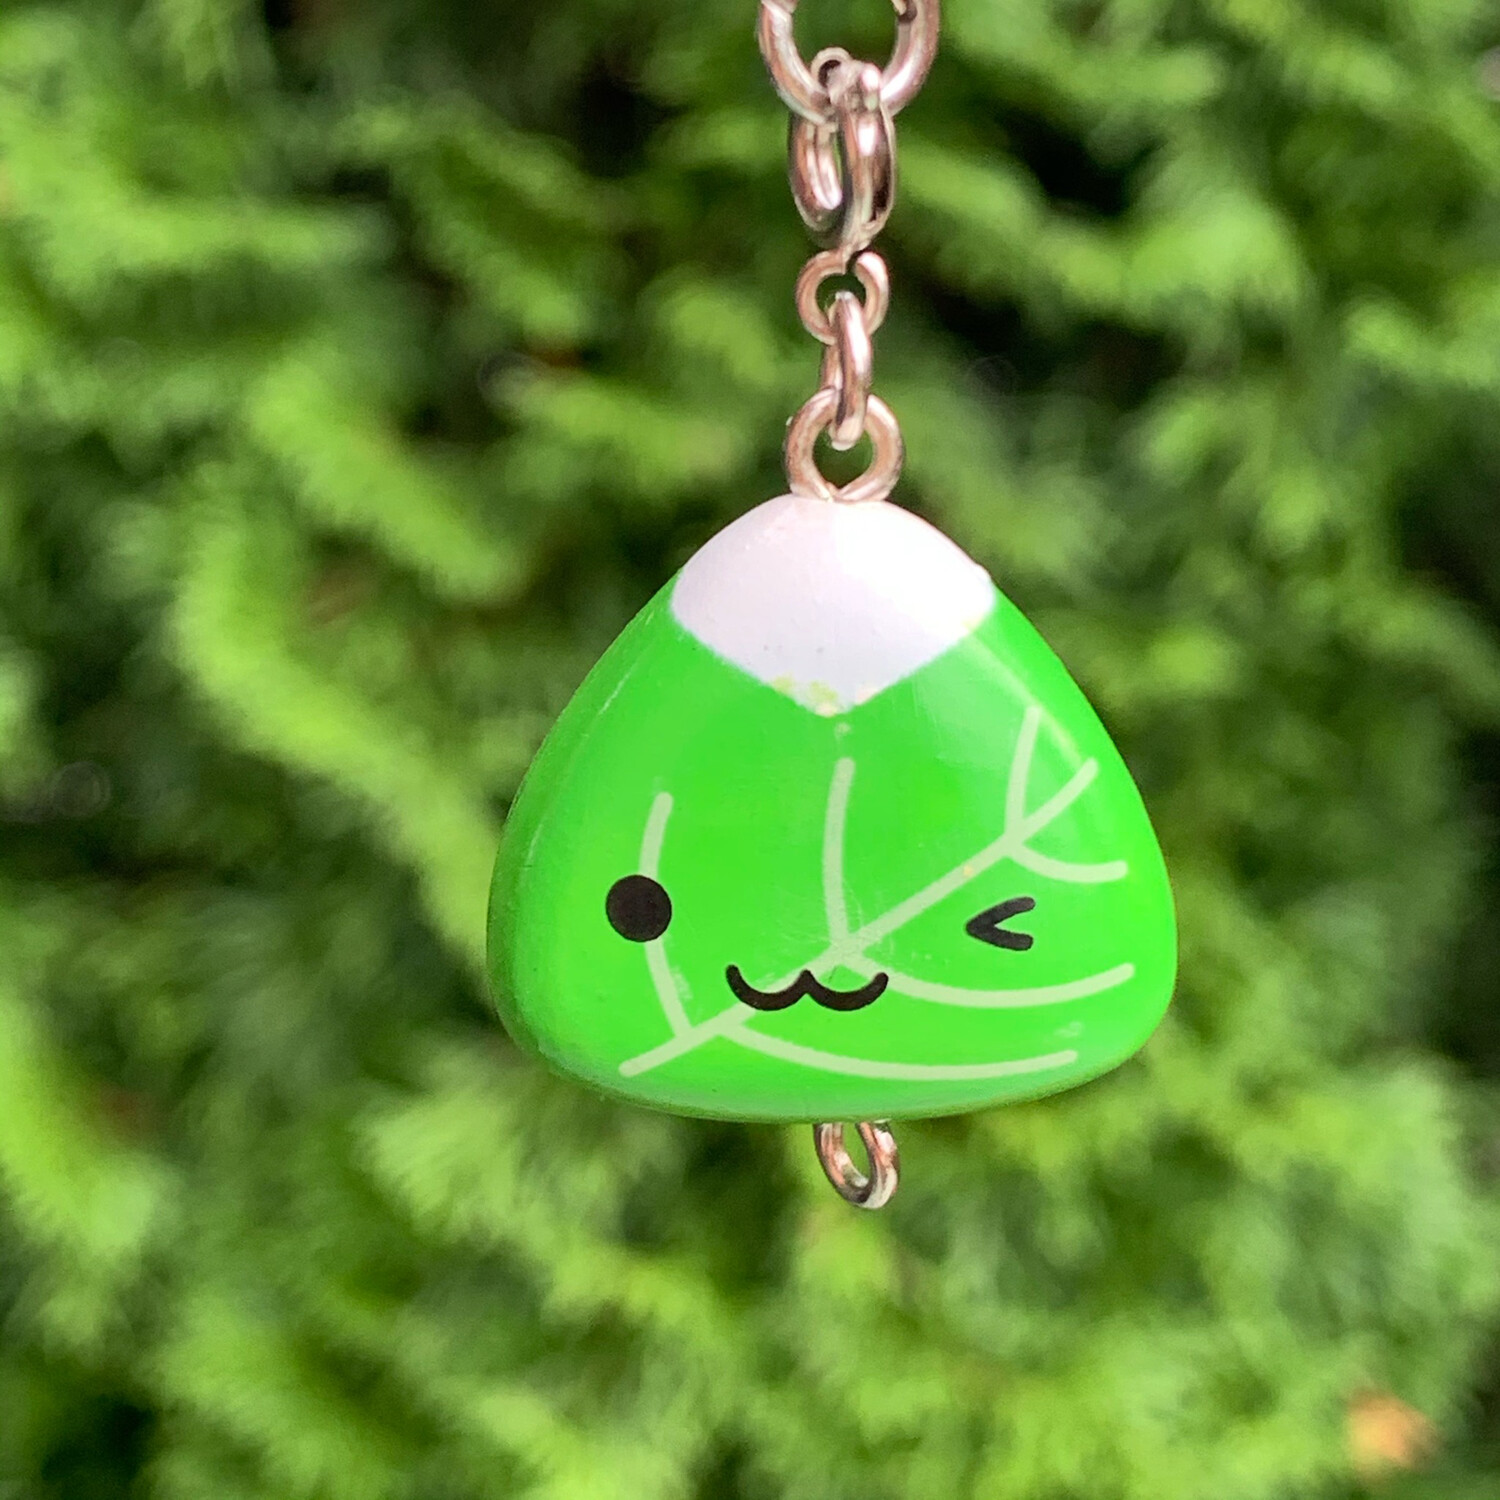 San-X Onigiri Rice Ball Guy Mascot Strap